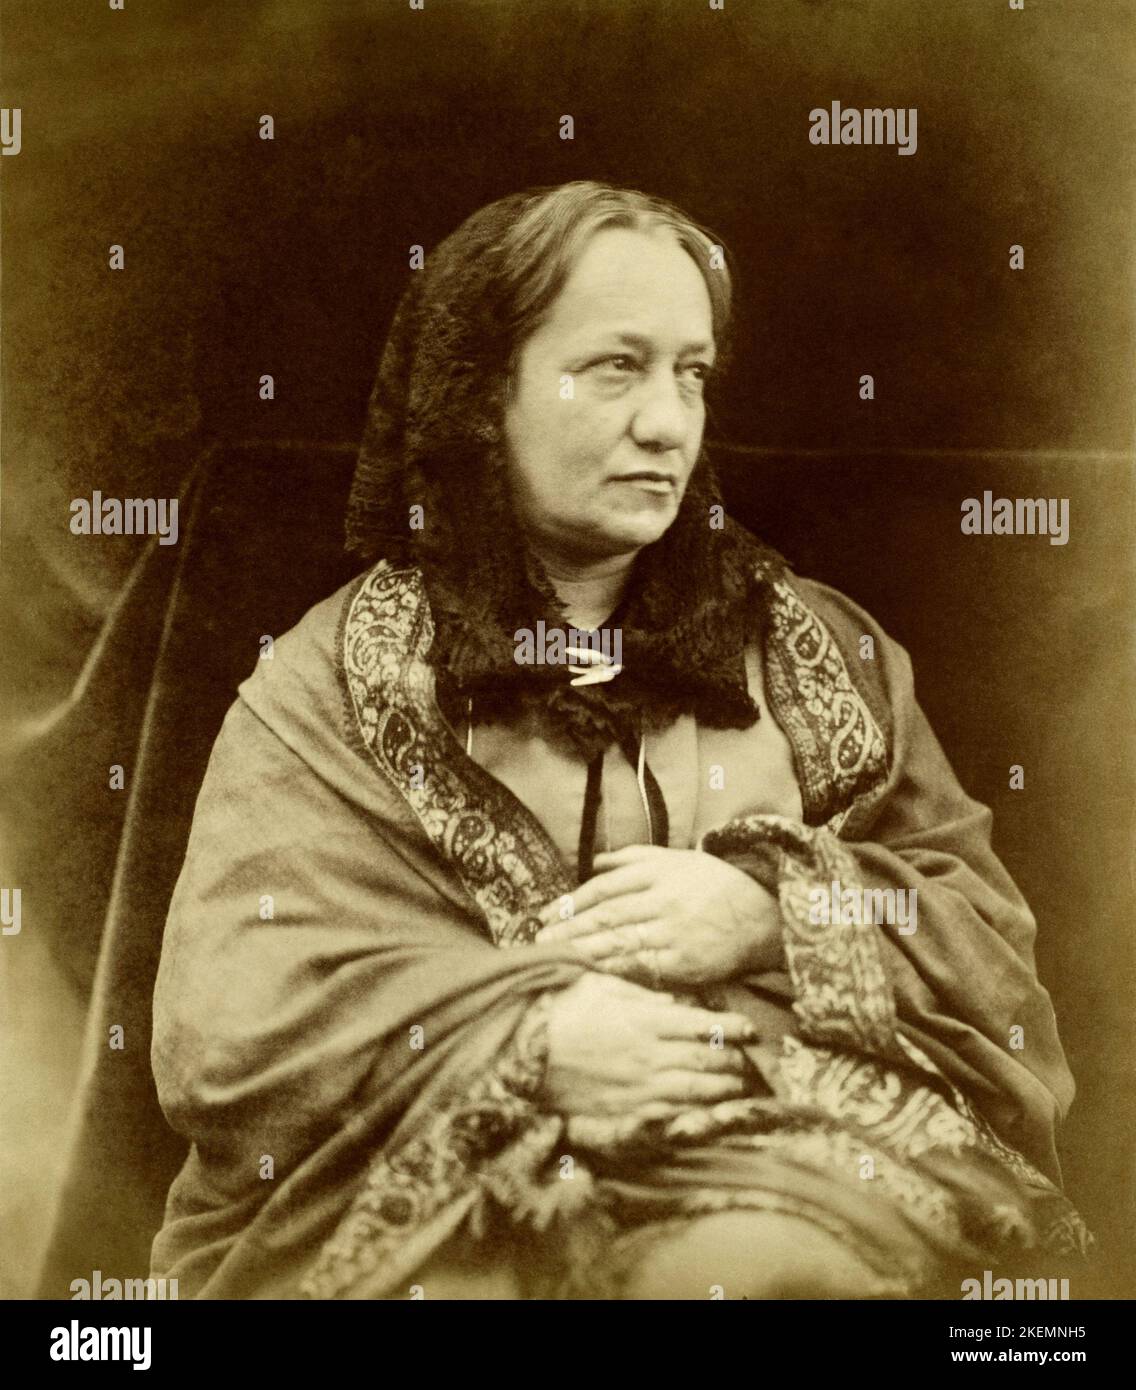 A portrait photograph of Julia Margaret Cameron, by Henry Herschel Hay Cameron.  1870. Stock Photo